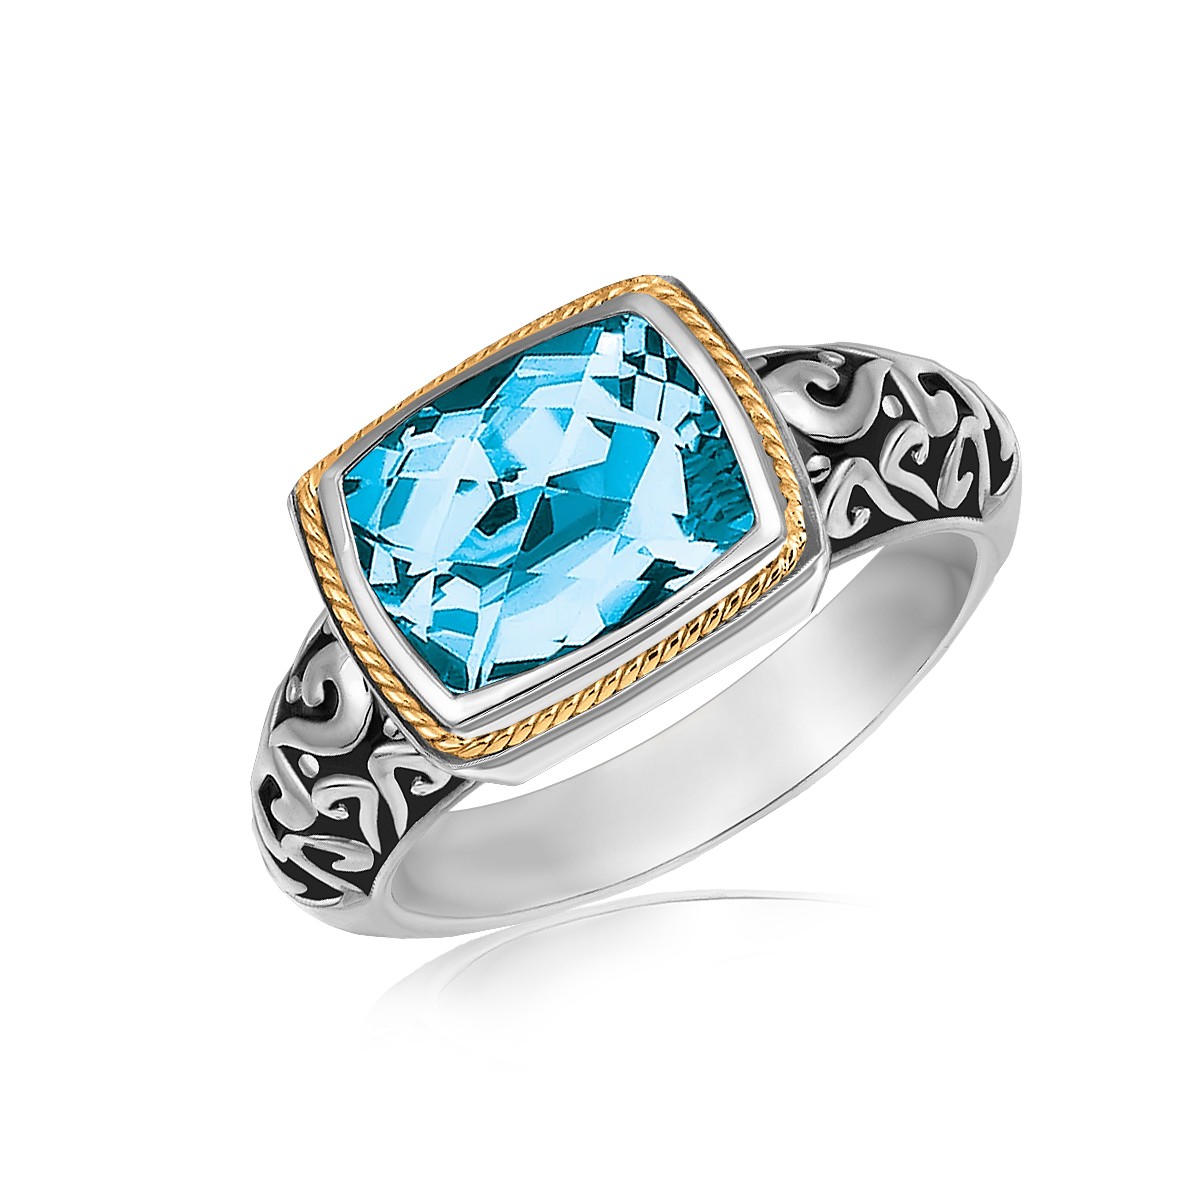 D118940-6 18k Yellow Gold & Sterling Silver Rectangular Blue Topaz Milgrained Ring, Size 6